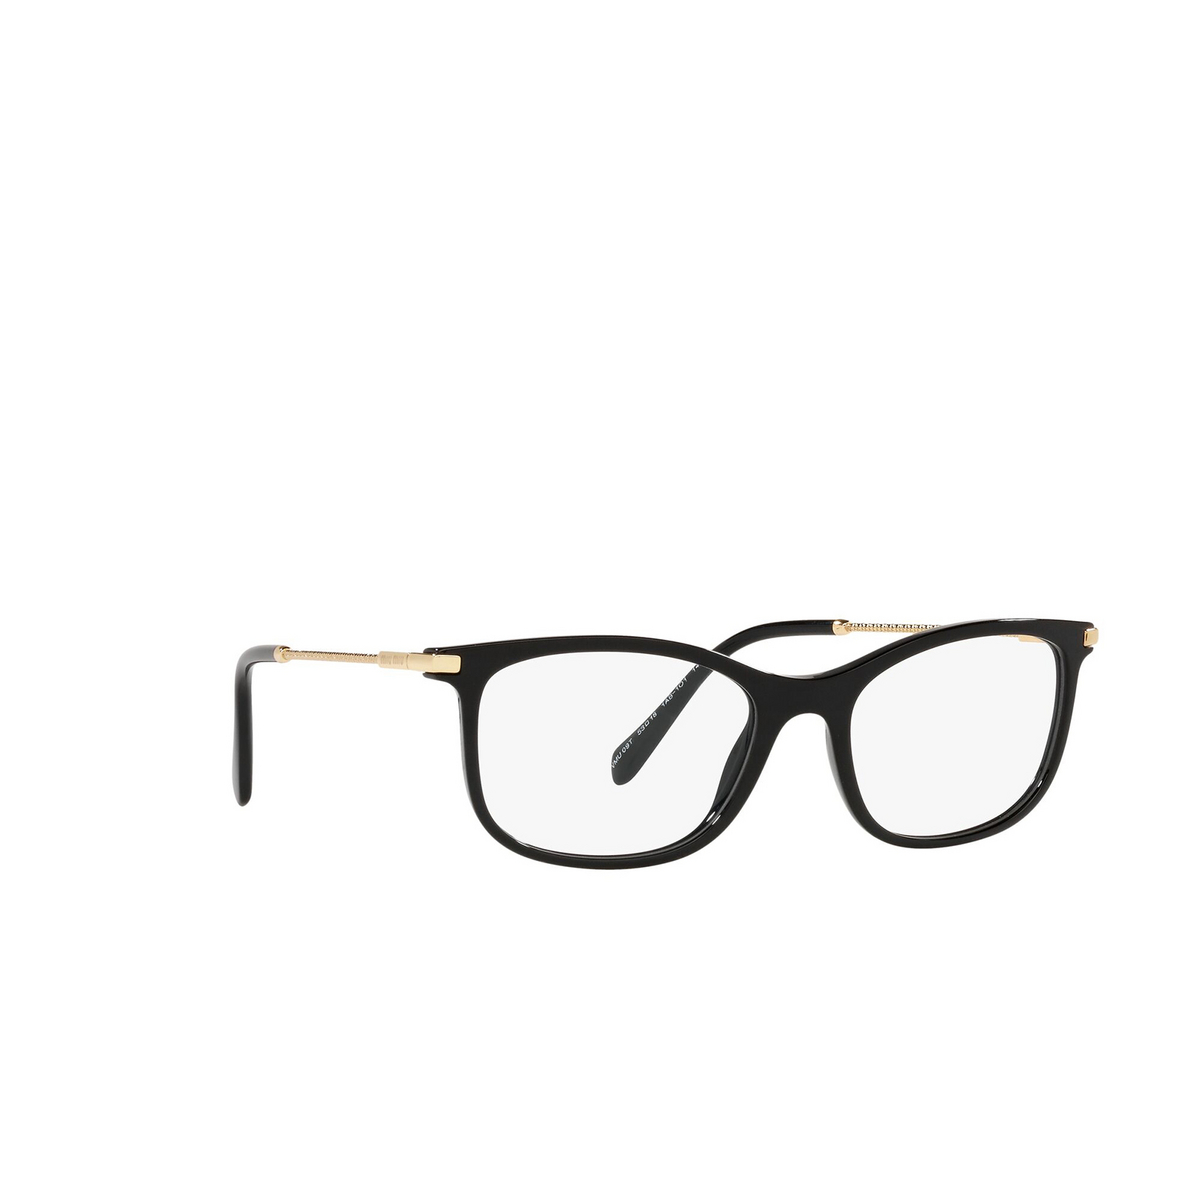 Miu Miu® Rectangle Eyeglasses: MU 09TV color Black 1AB1O1 - three-quarters view.